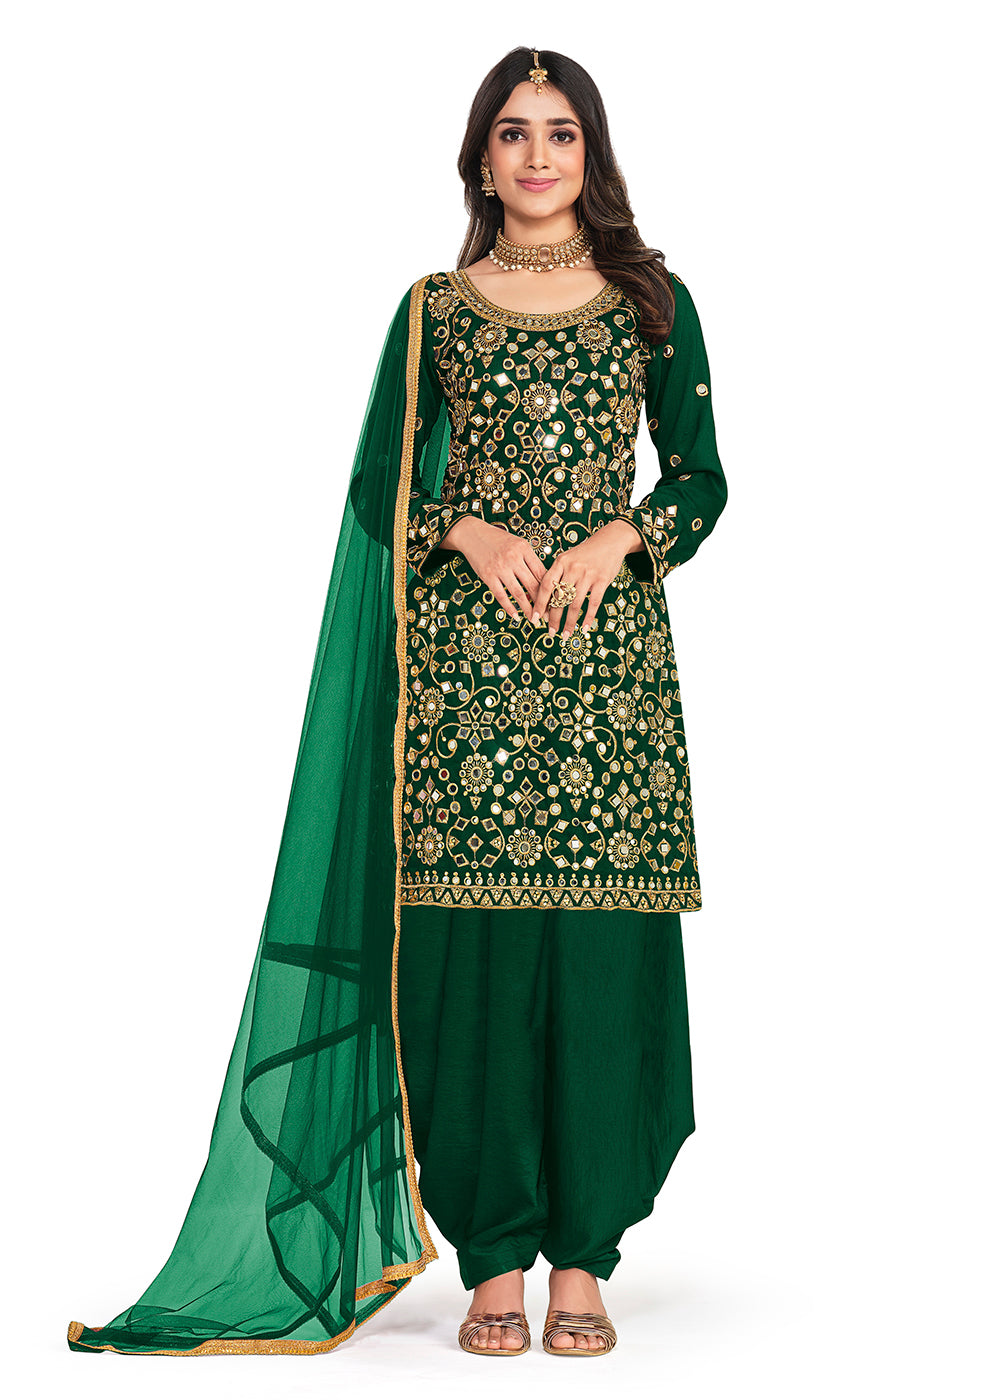 Buy Now Silk Lovely Green Mirror Work Patiala Salwar Kameez Online in USA, UK, Canada & Worldwide at Empress Clothing.